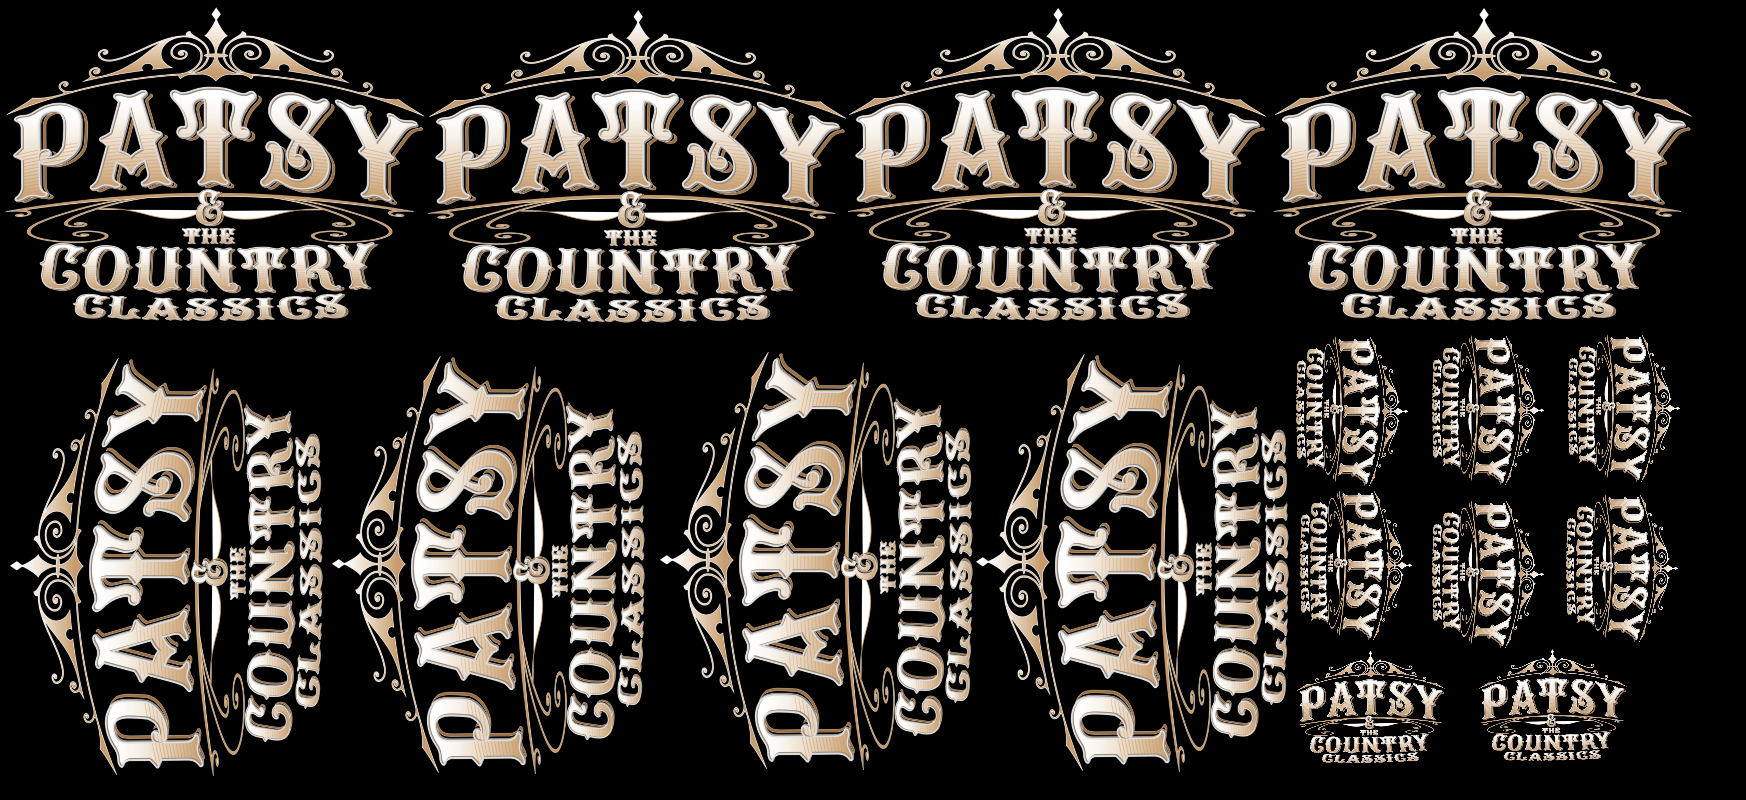 Patsy & Country Classics